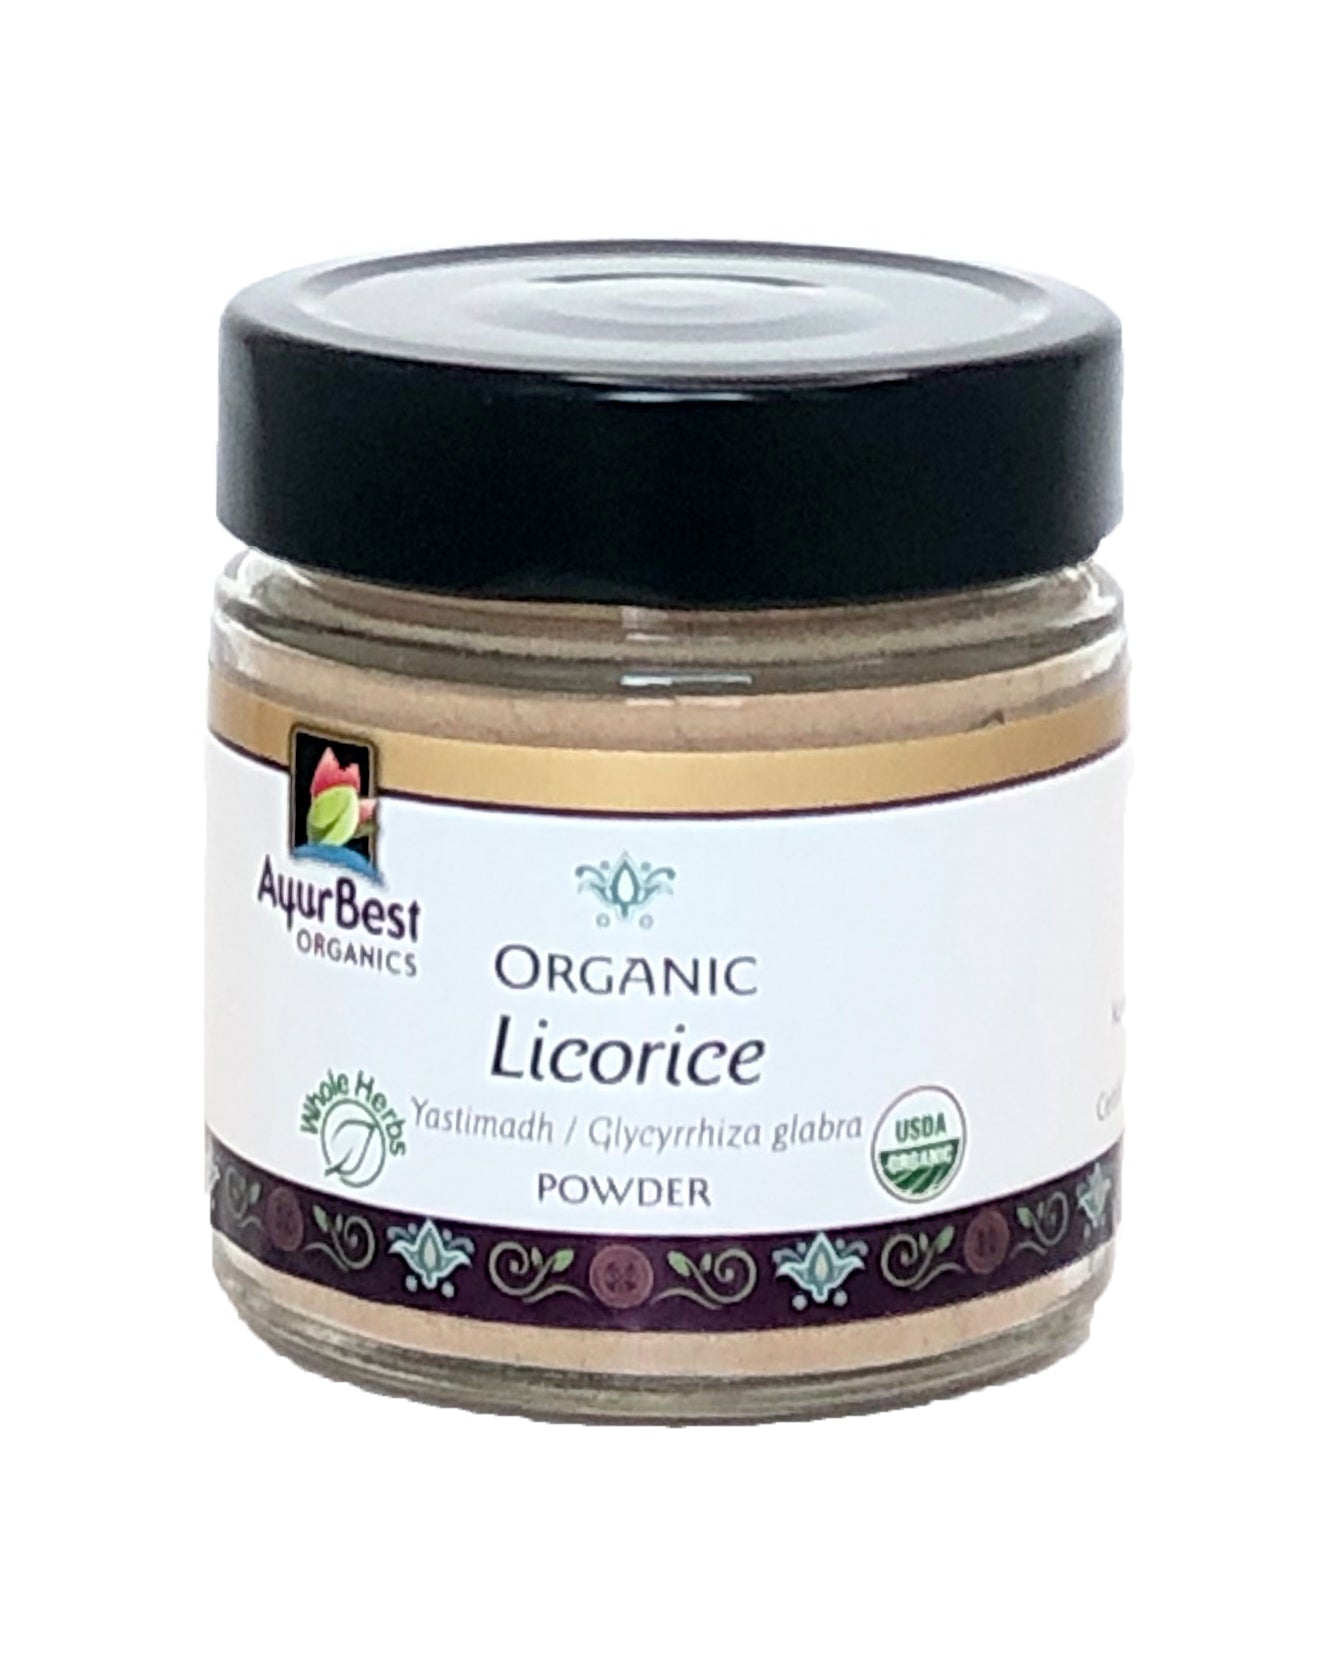 Wholesale Spices & Herbs - Licorice Powder, Organic 3.7oz (107g) Jar